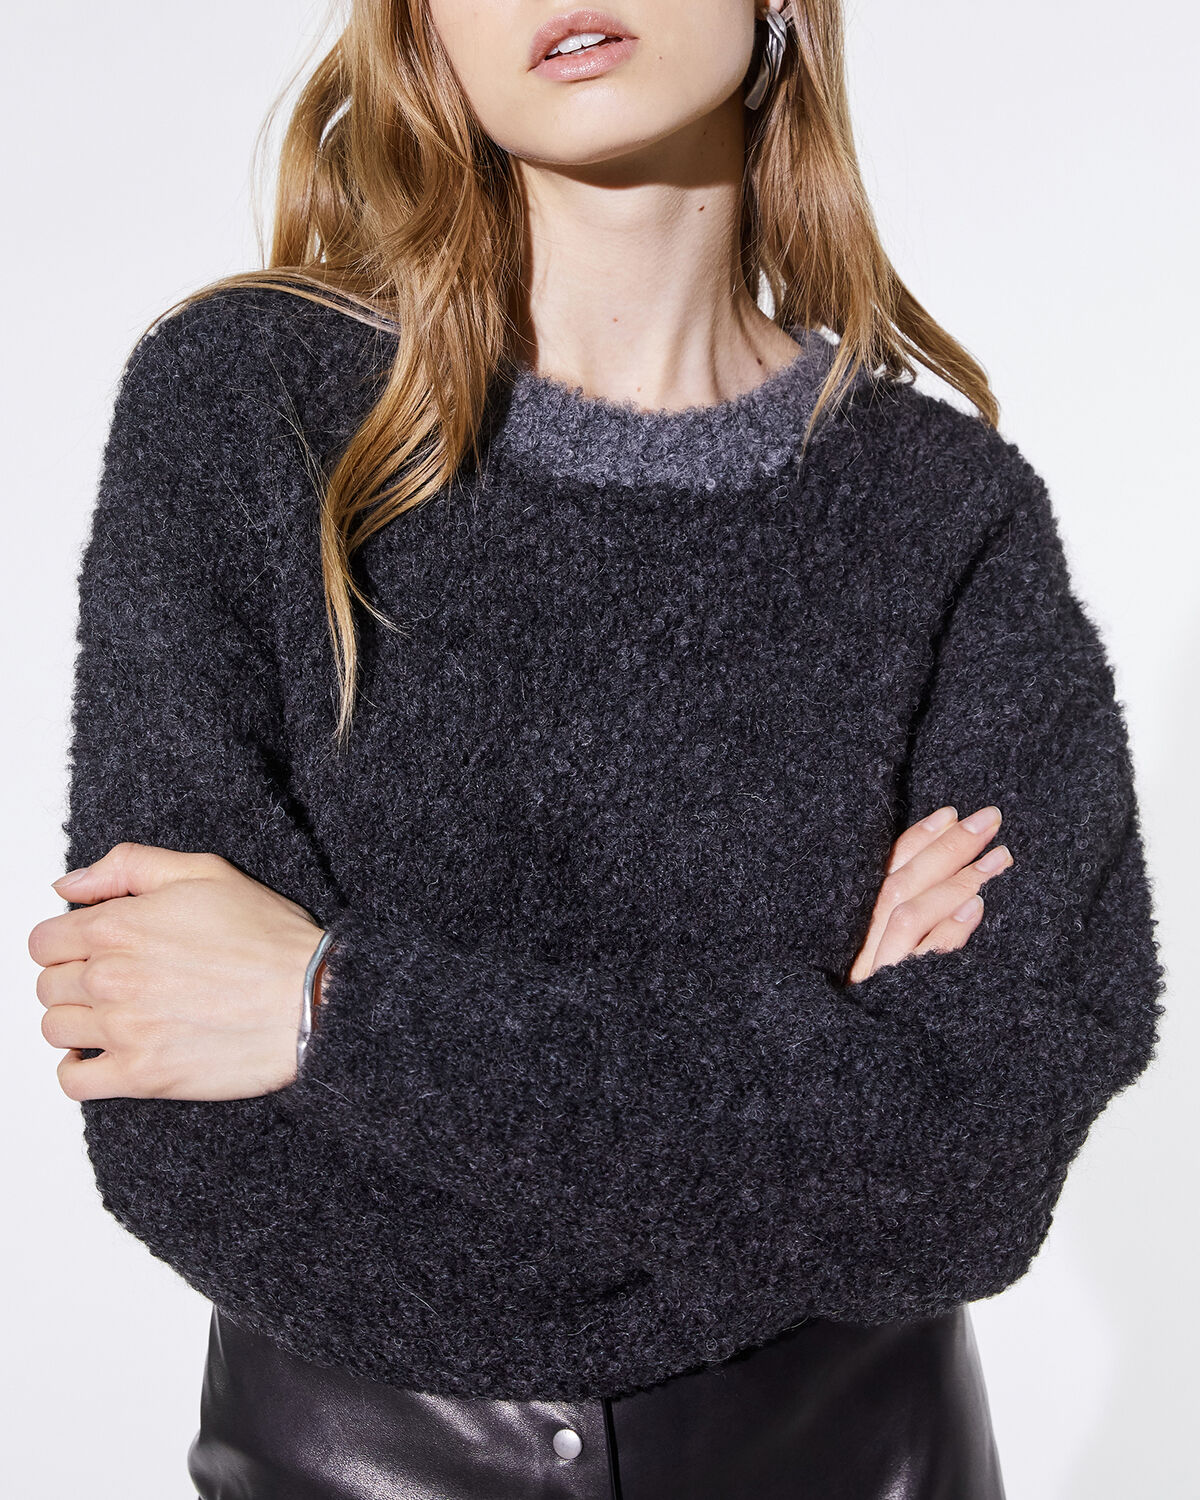 Yale Sweater Anthracite by IRO Paris